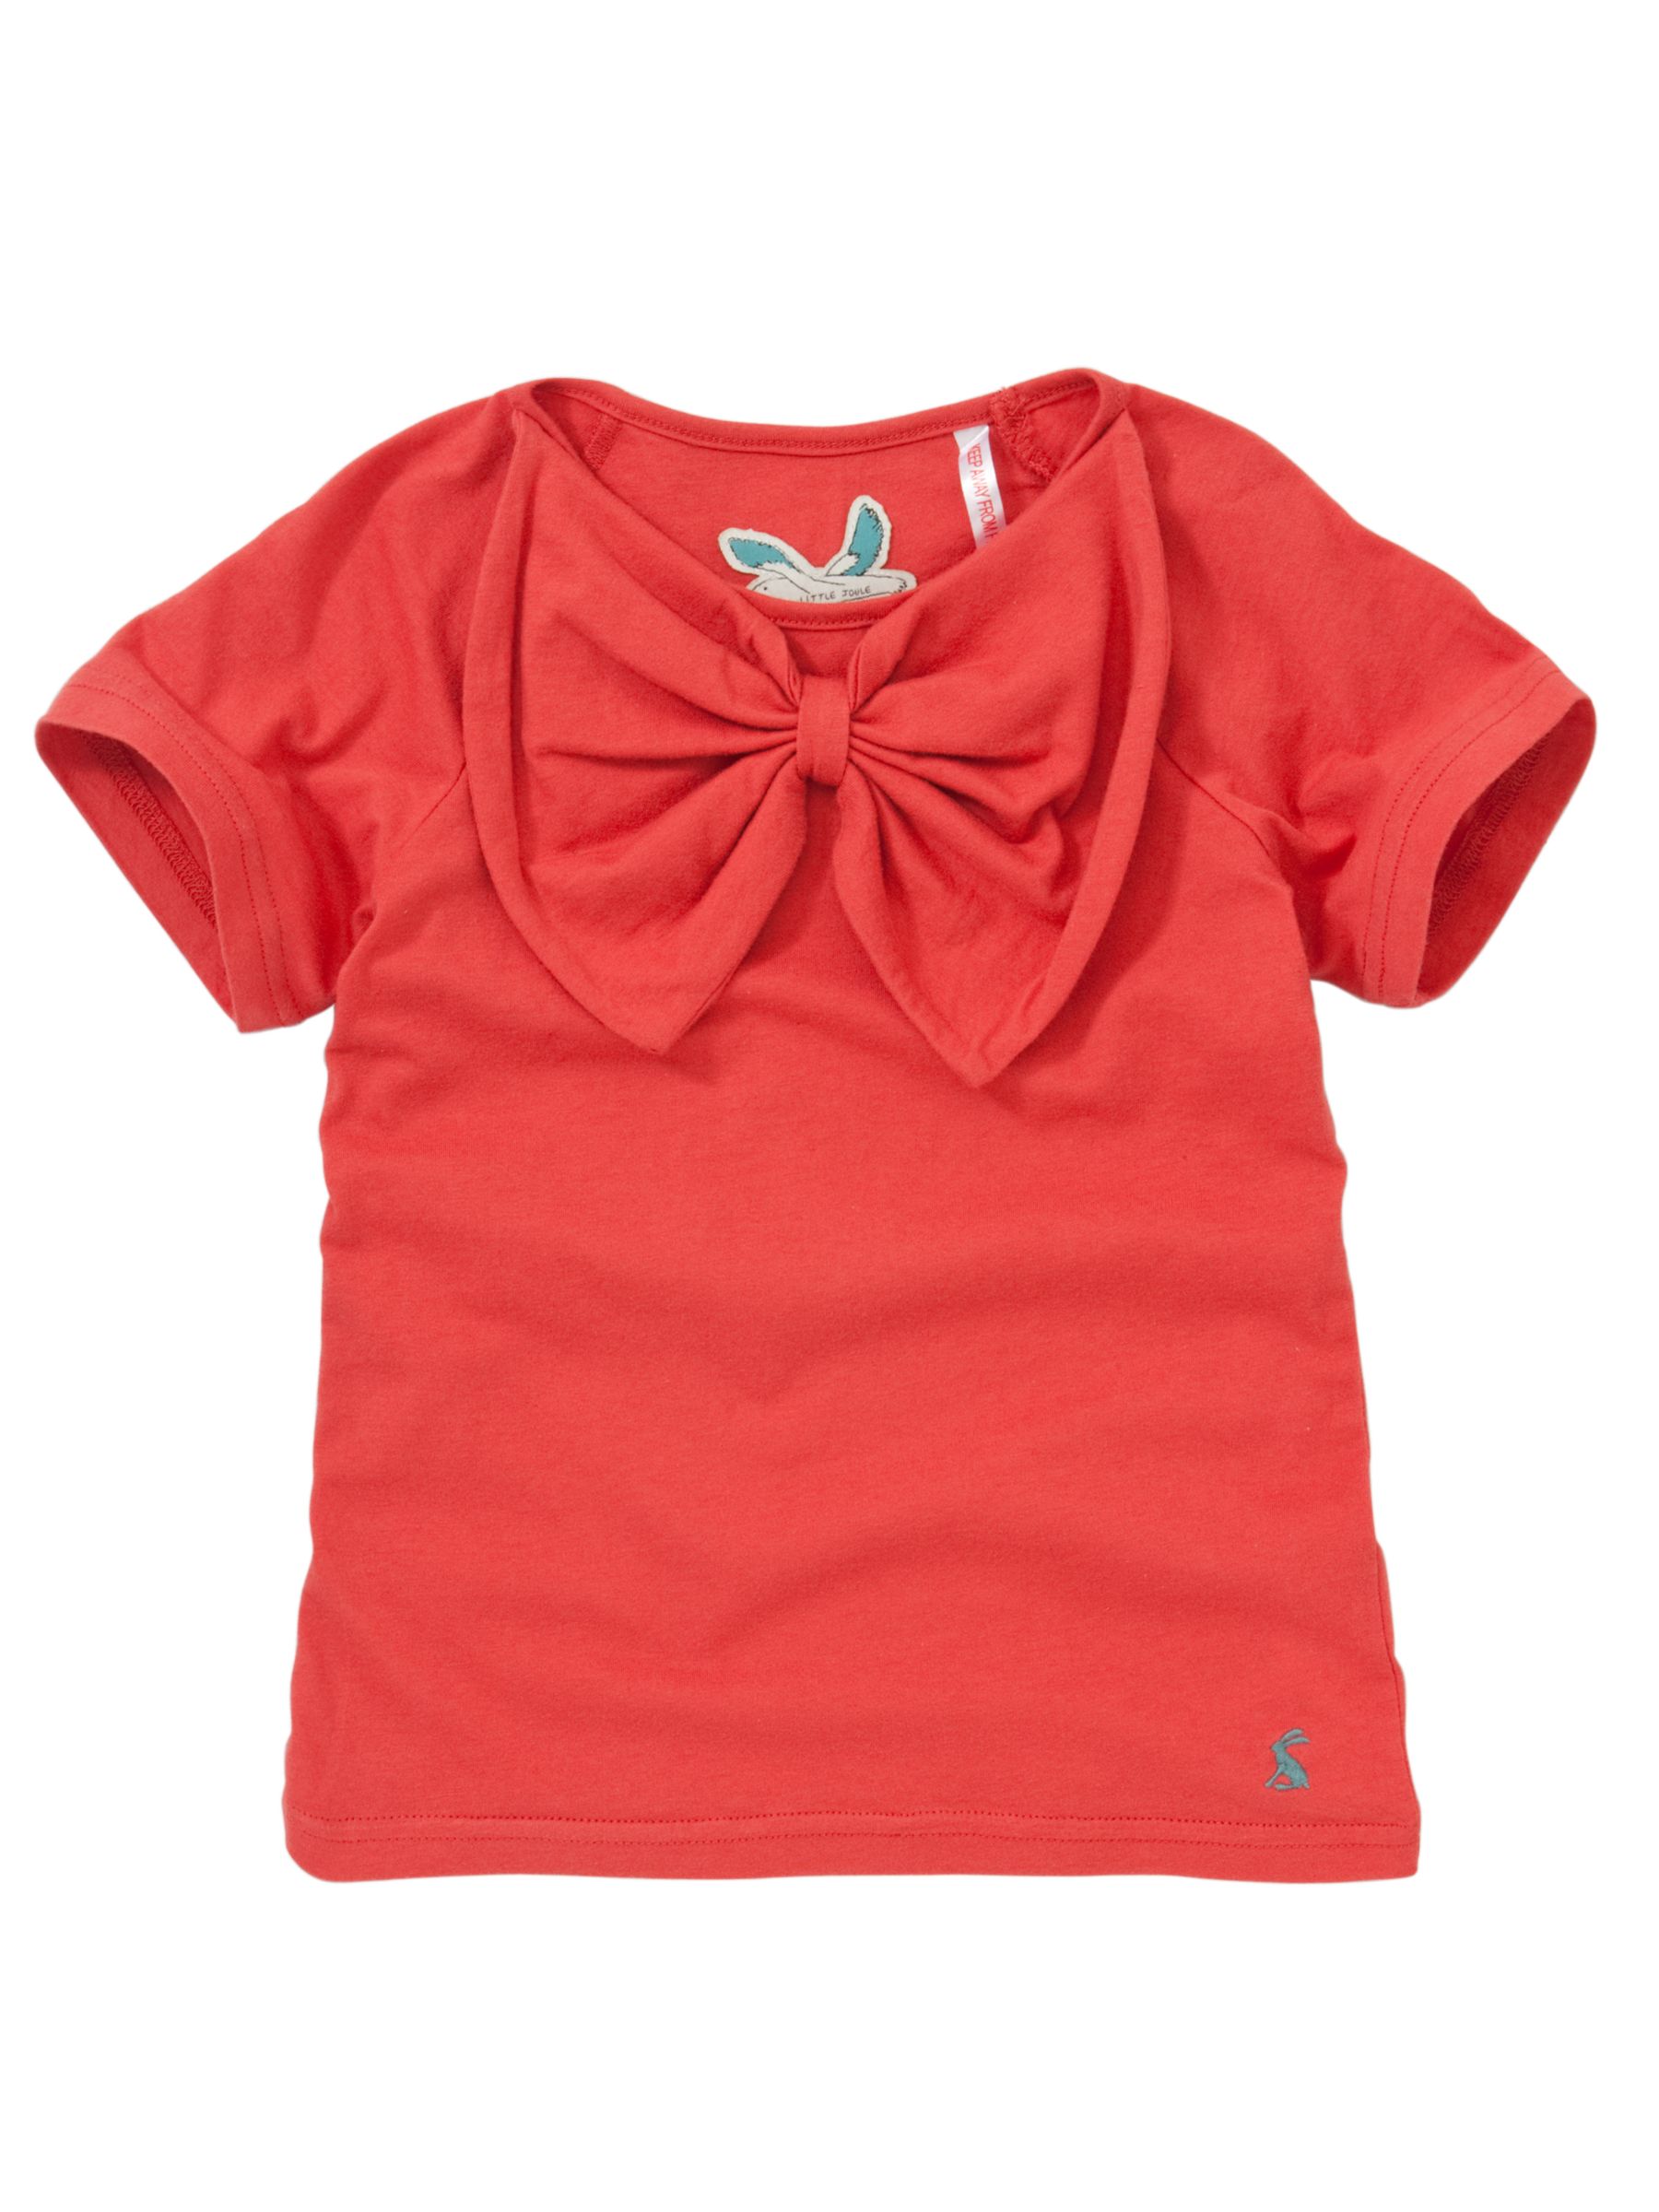 Bow T-Shirt, Coral